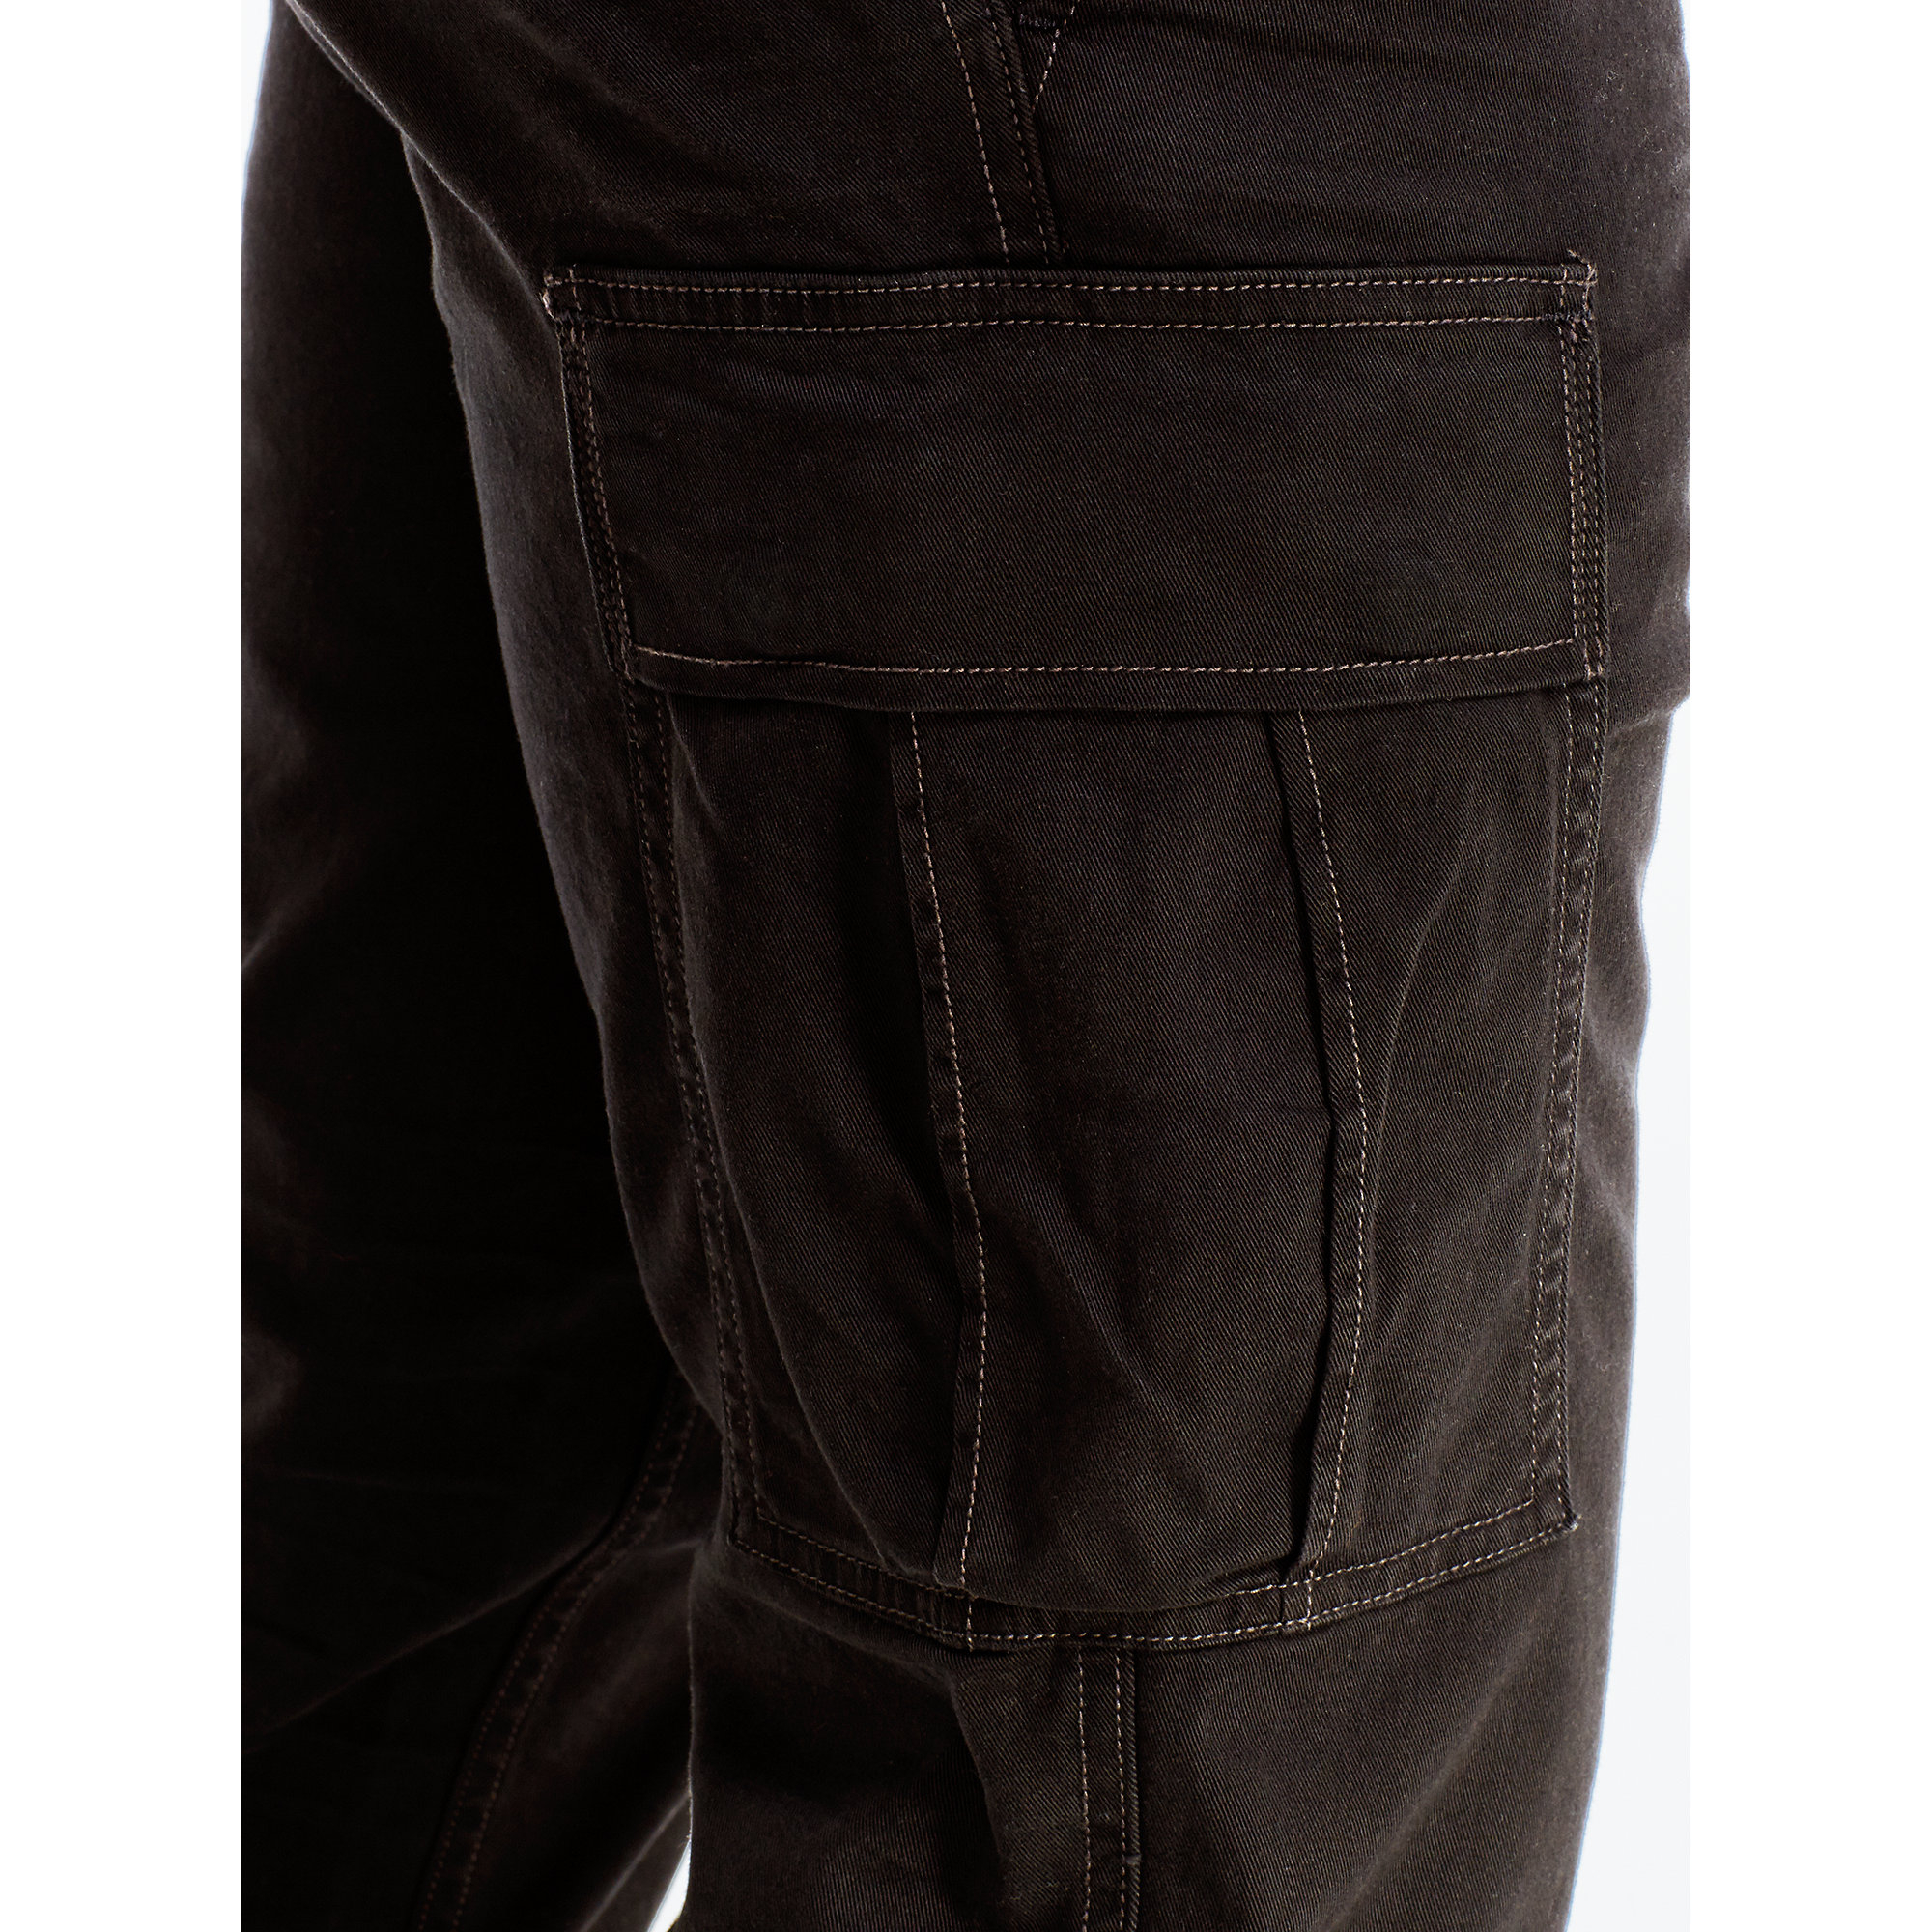 Lyst - Polo Ralph Lauren Slim-fit Twill Cargo Pant in Black